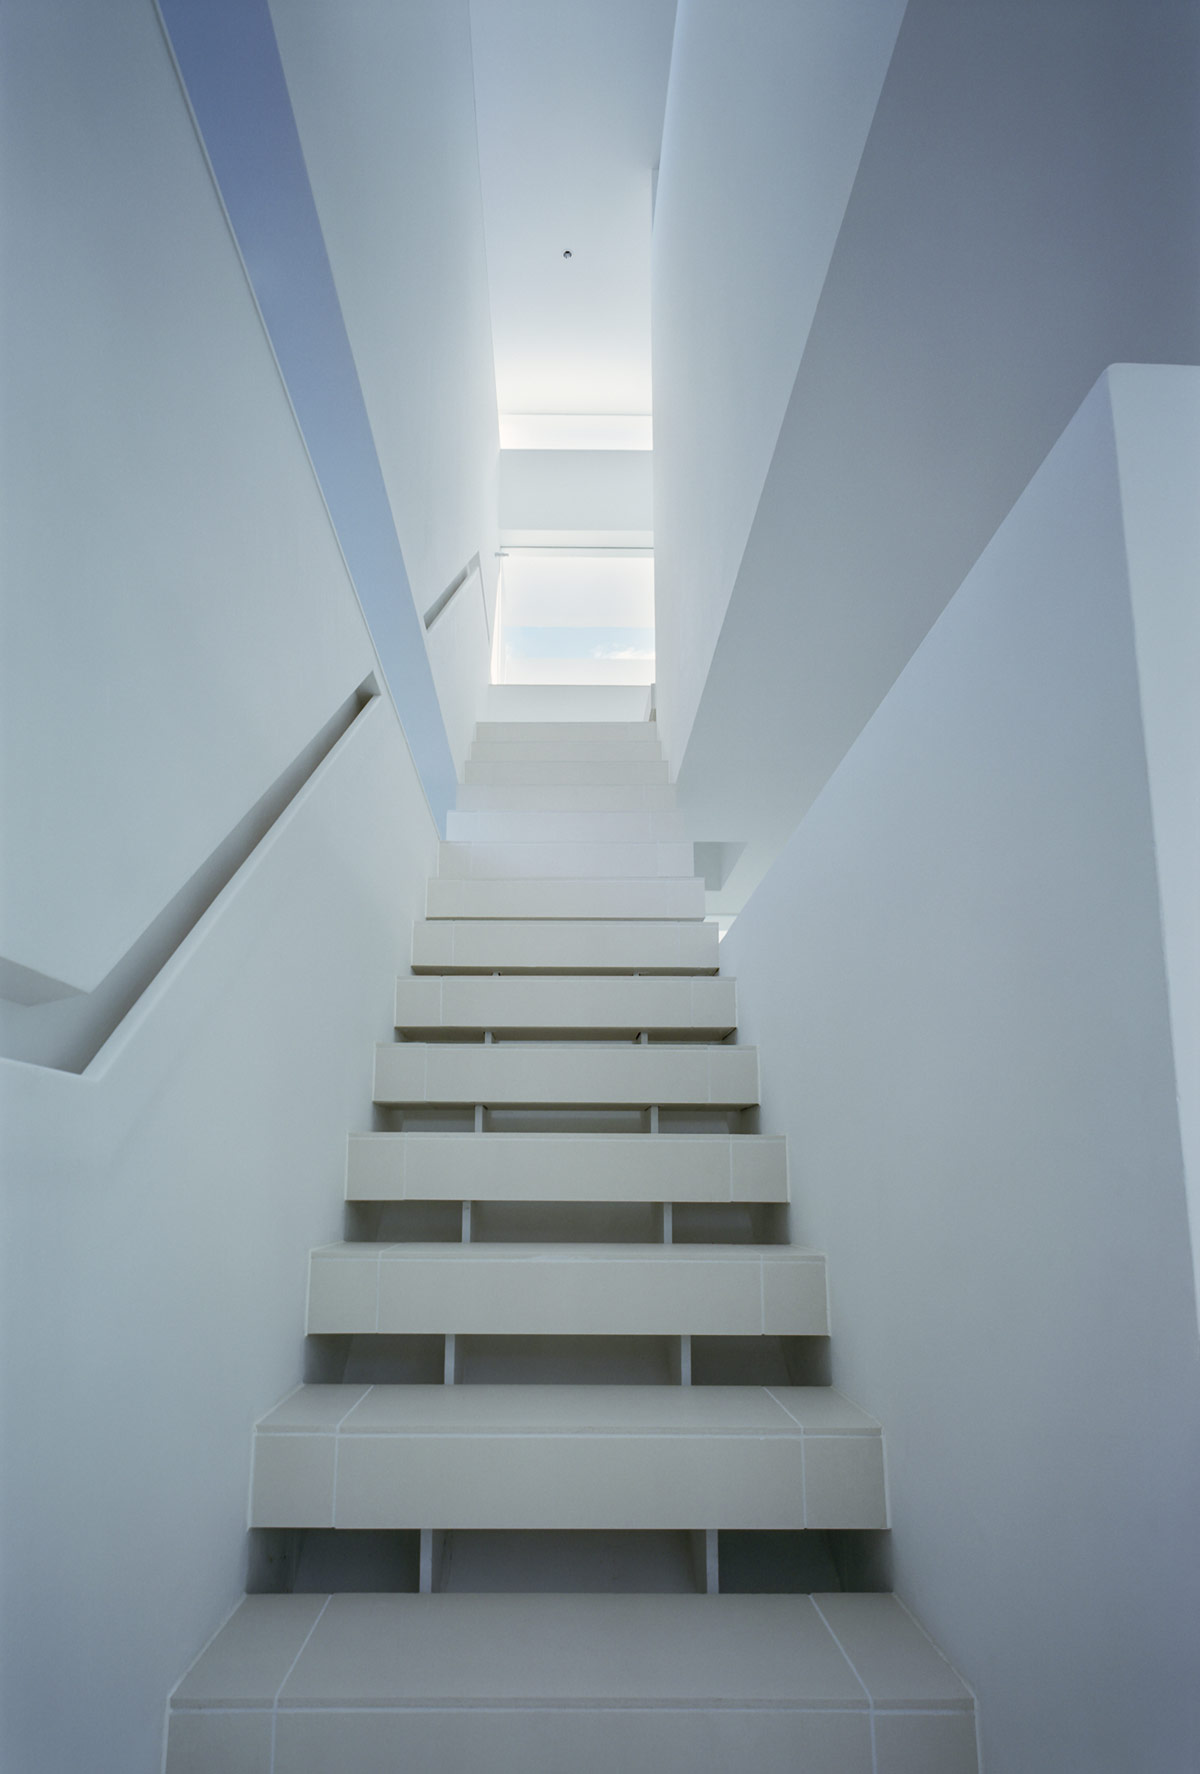 staircase-design-1-600x887.jpg